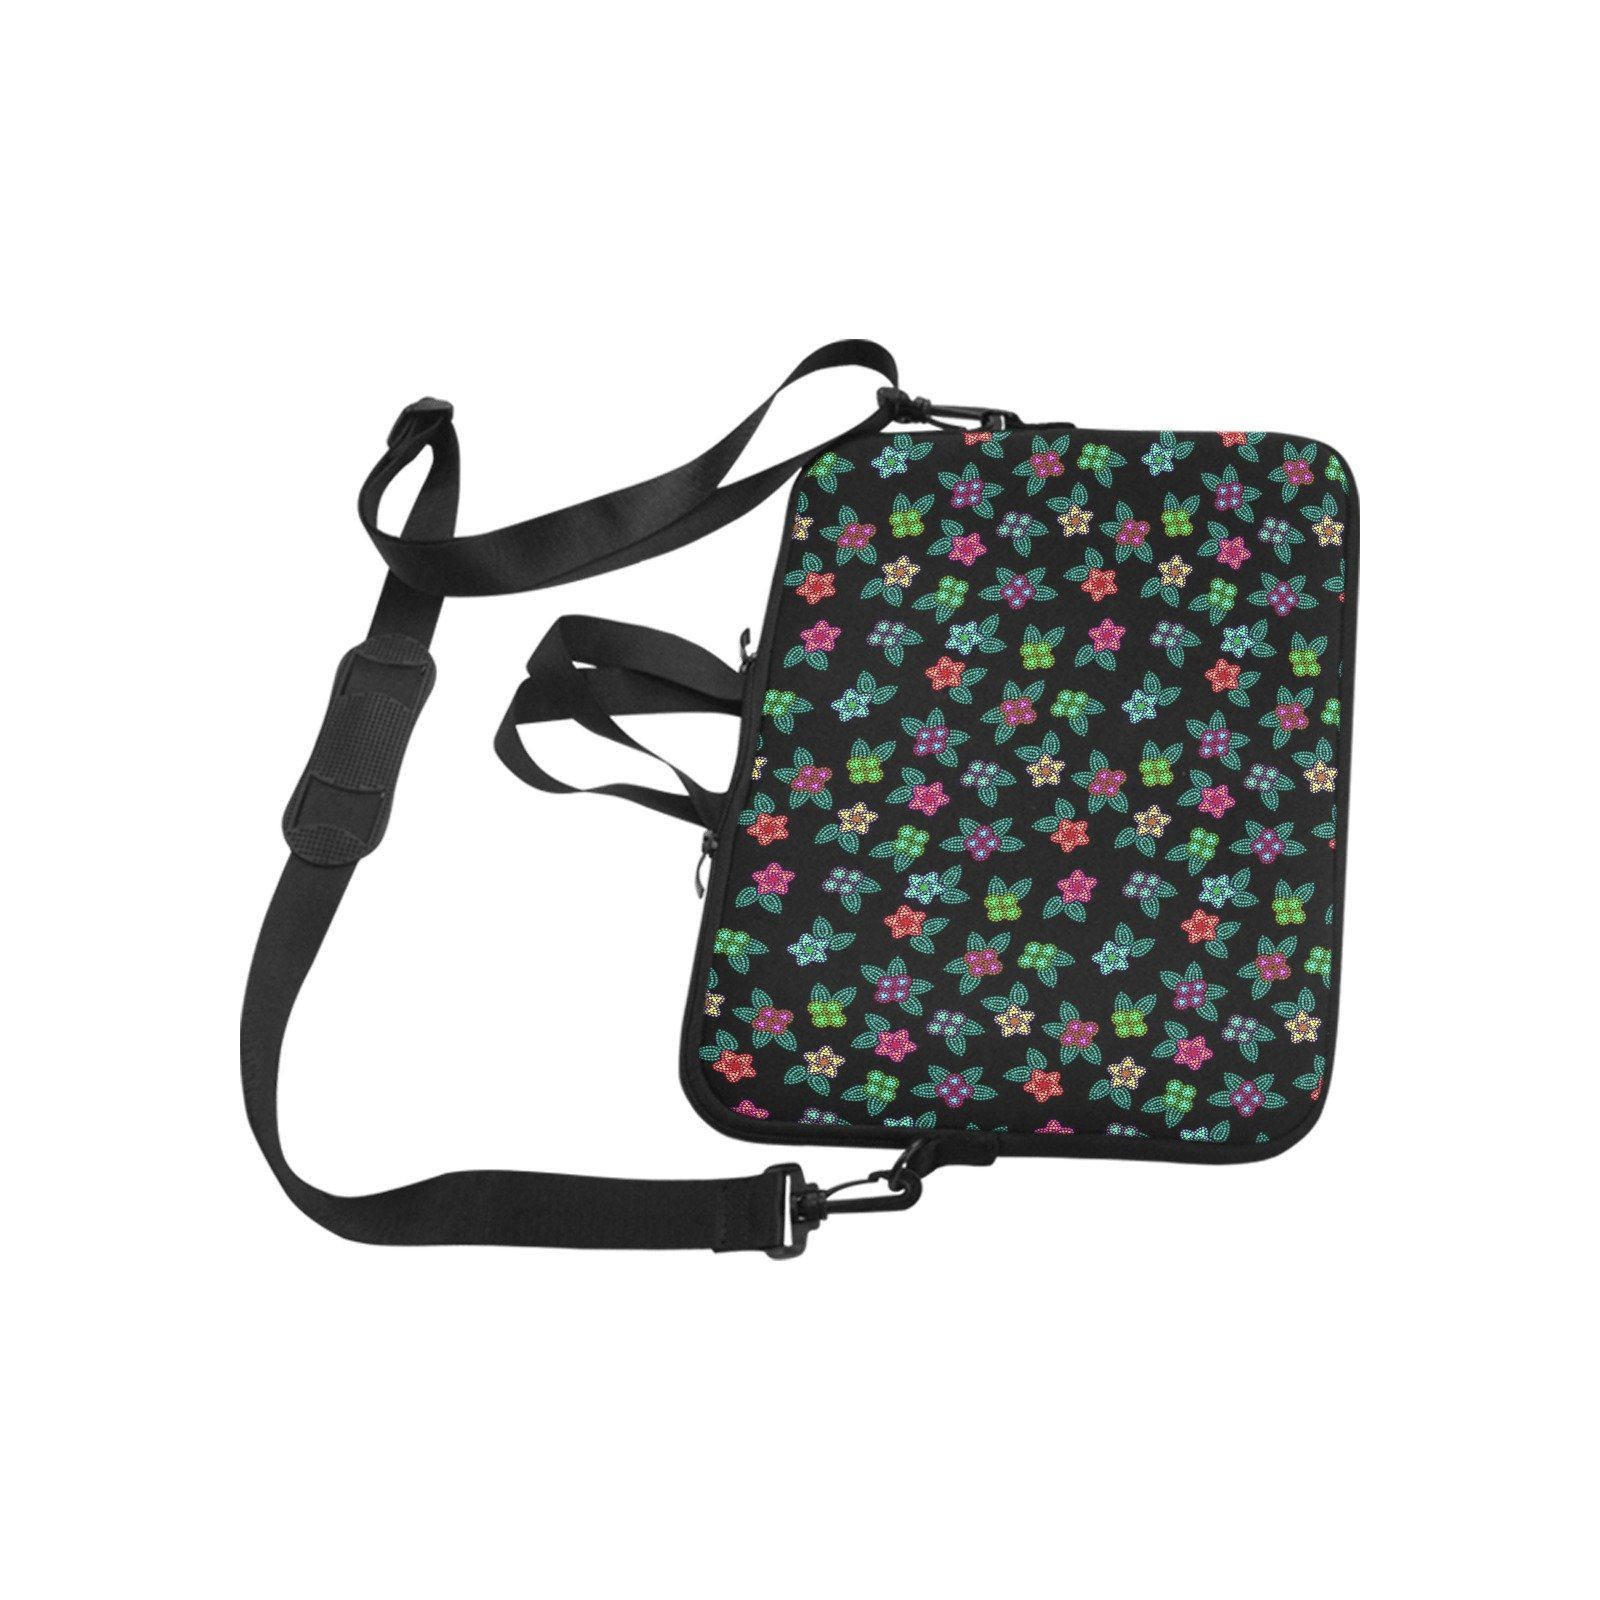 Berry Flowers Black Laptop Handbags 17" bag e-joyer 